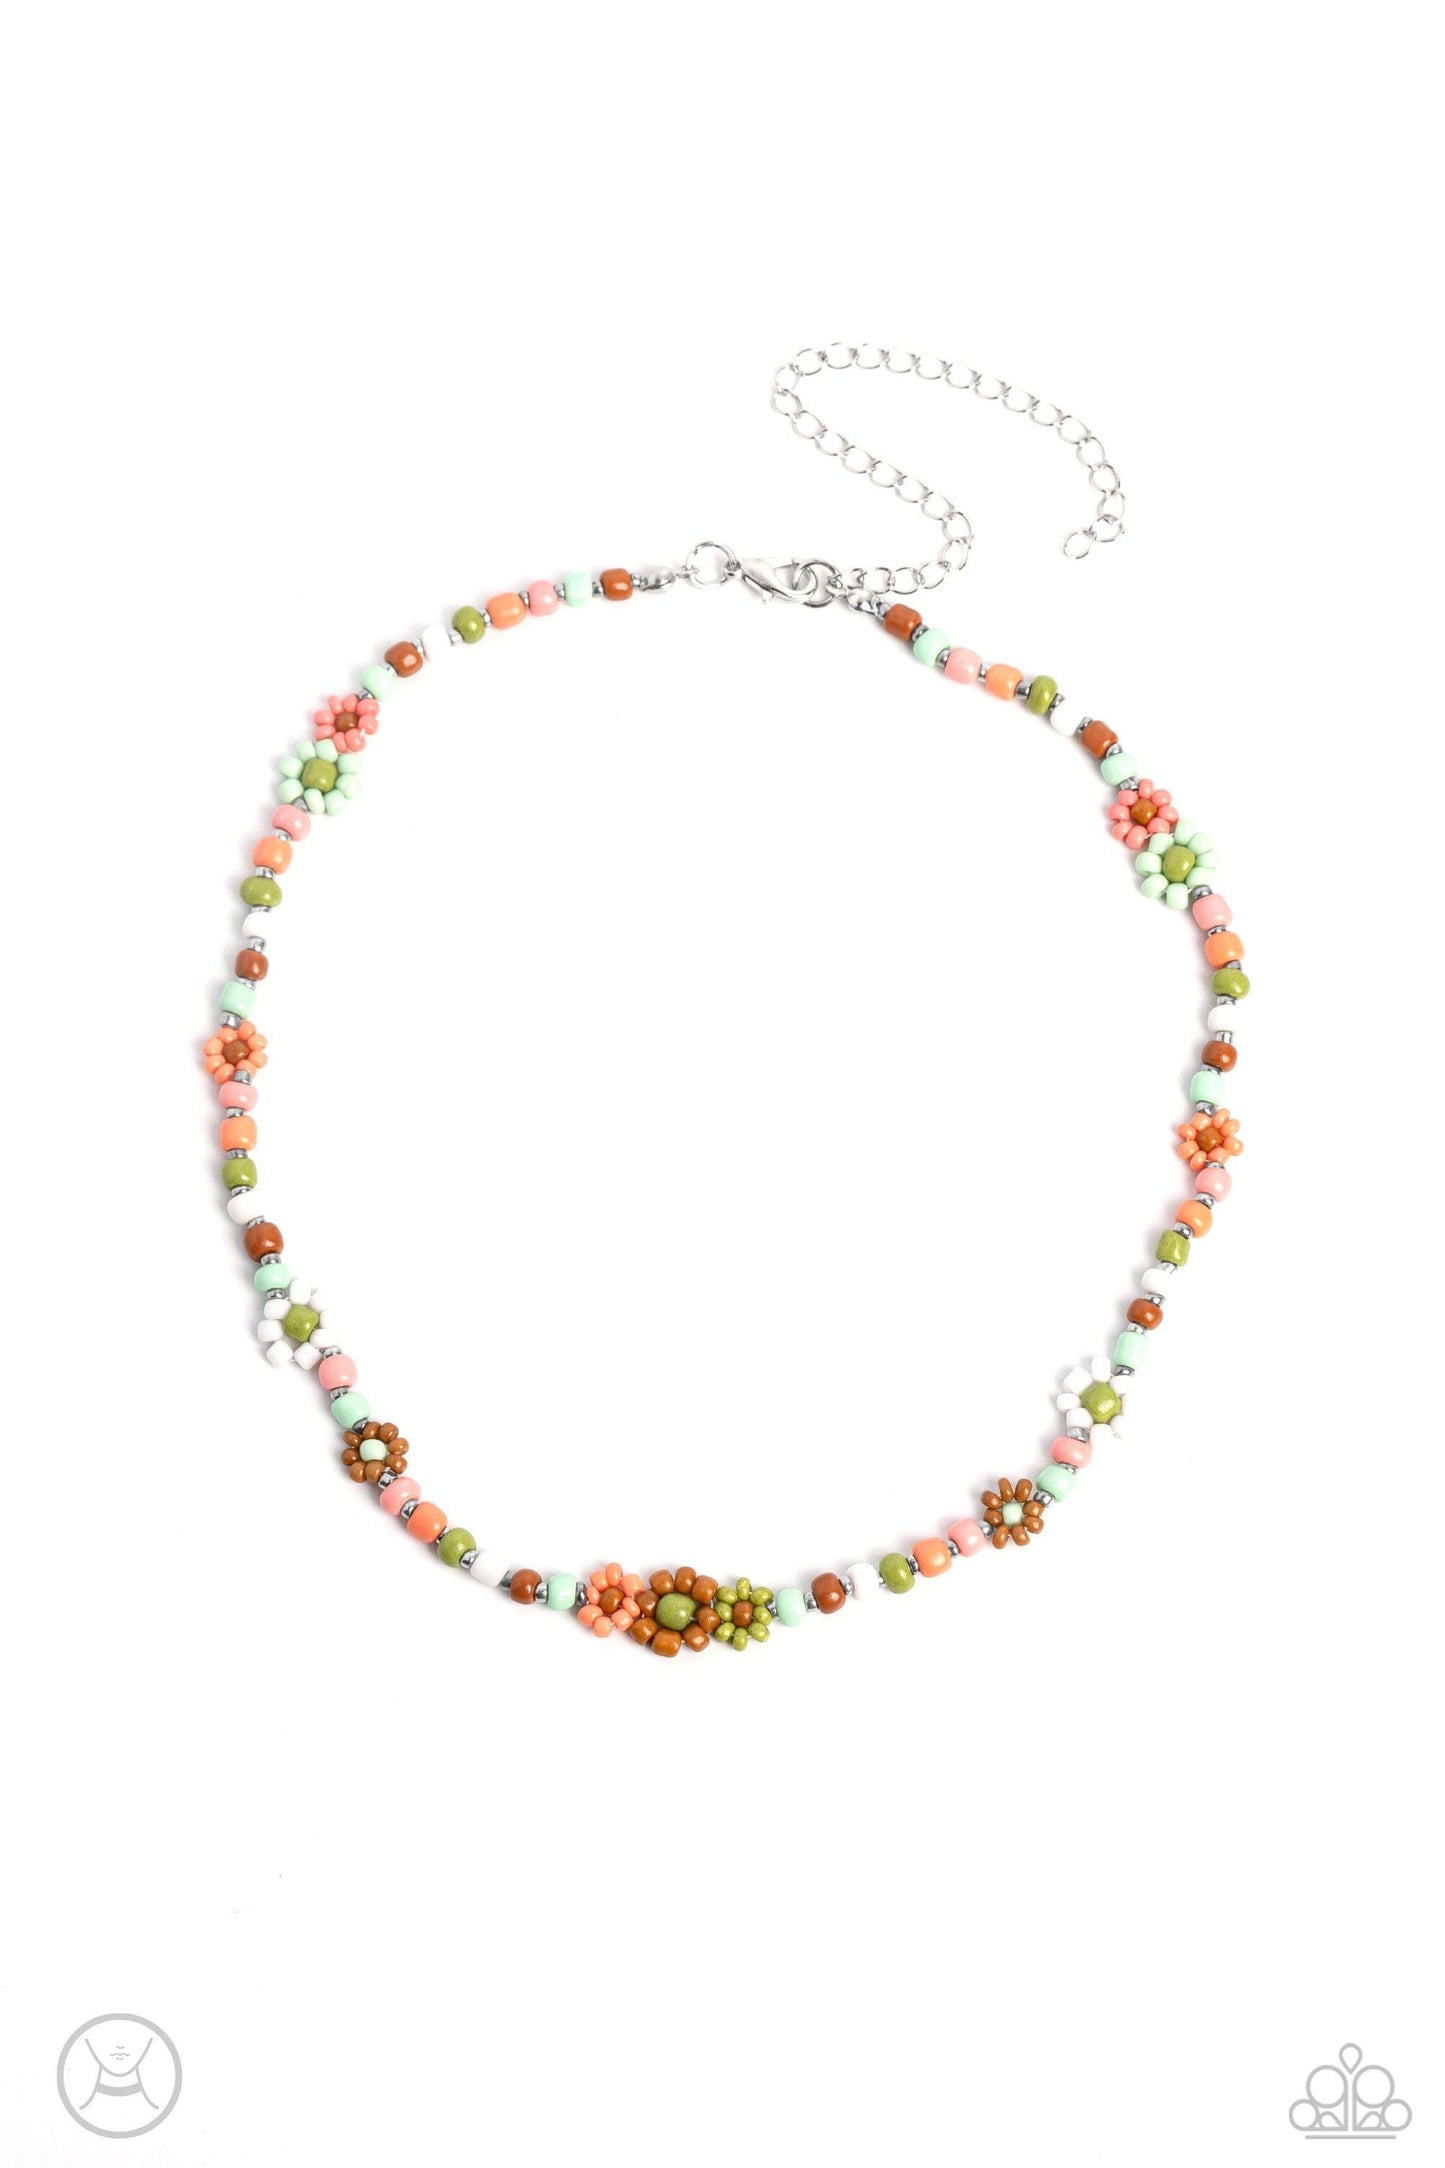 Paparazzi Accessories - Flower Child Flair - Multicolor Gr/mt Choker Necklace - Bling by JessieK